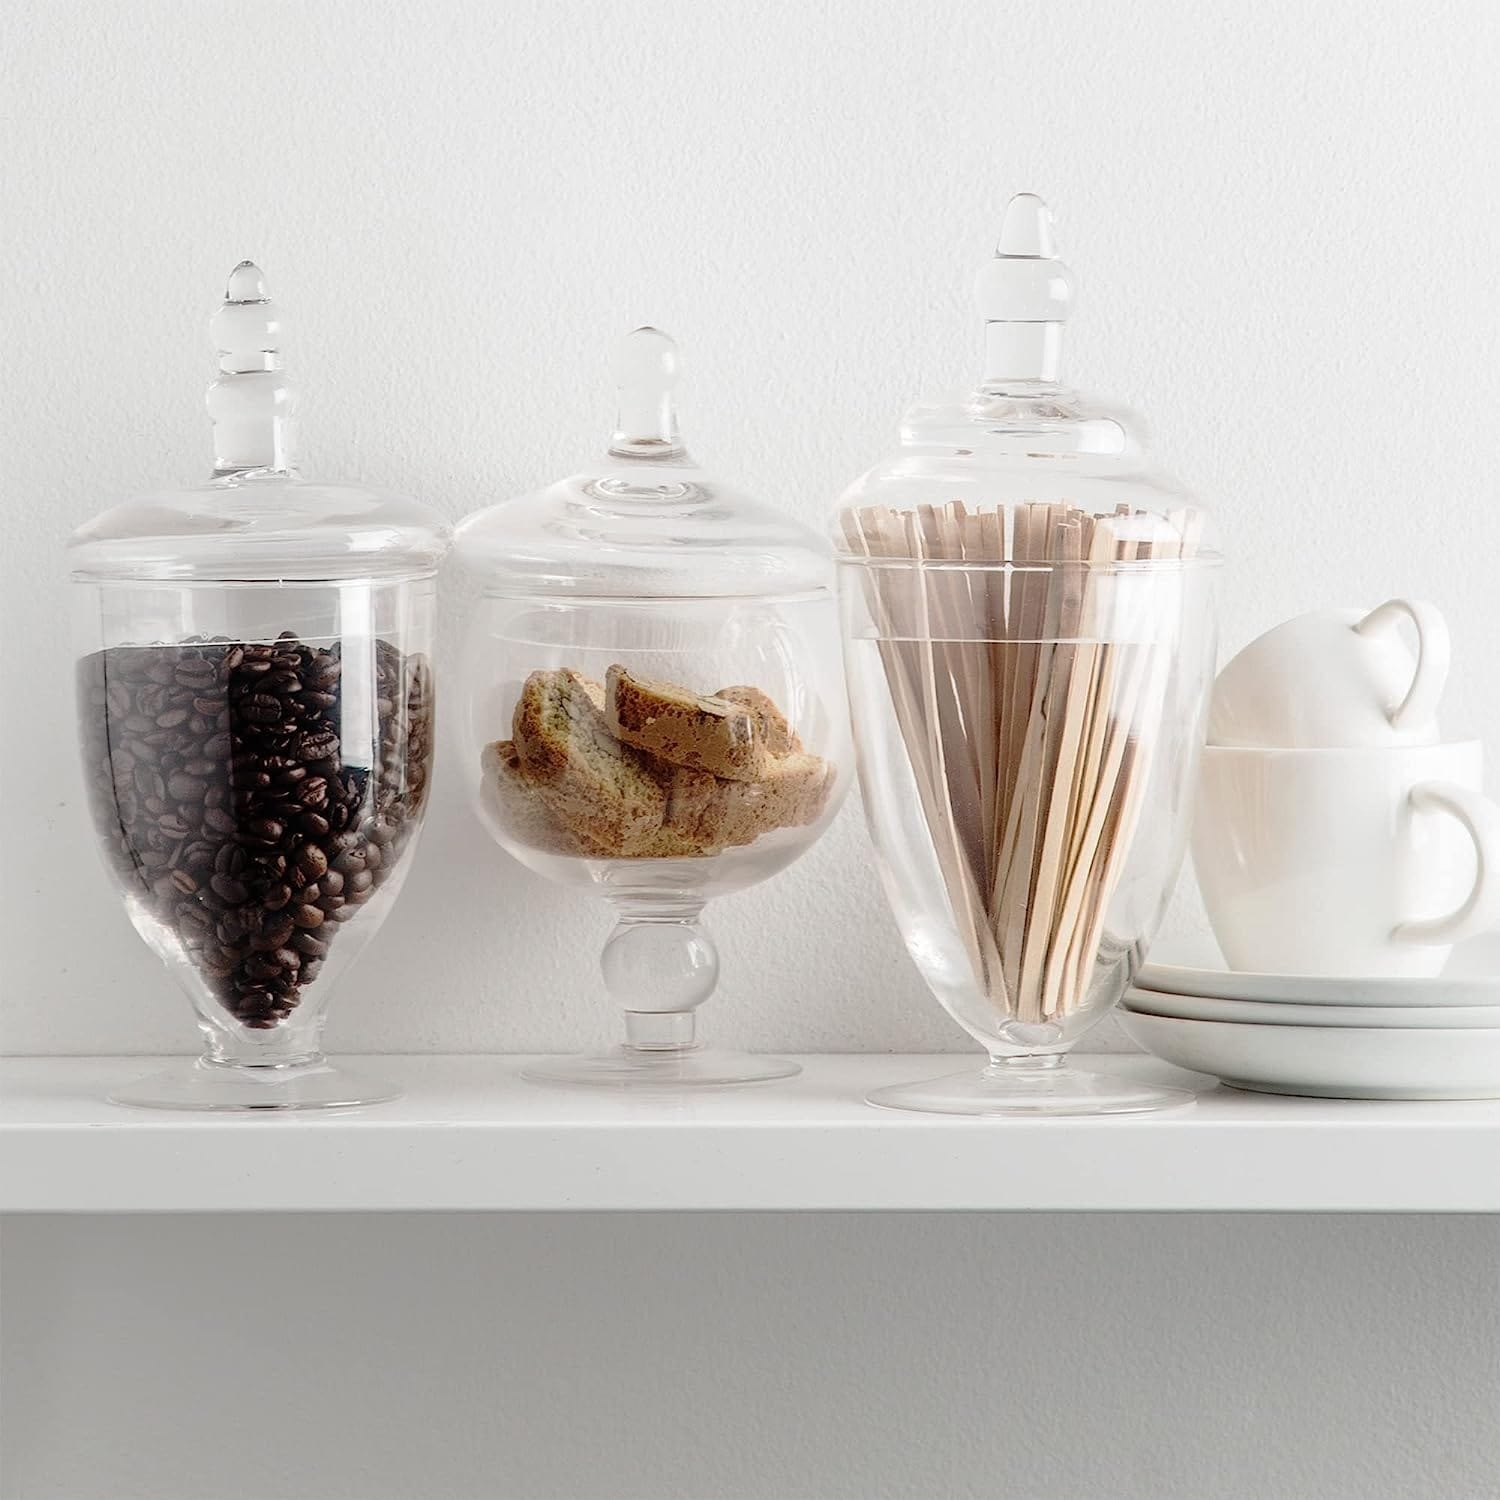 Set of 3 Candy Jar with Lid, Premium Acrylic Clear Glass Jar, Wedding &  Home DÃ©cor Centerpiece Cookie Candy Buffet Decorative Kitchen Storage Jar